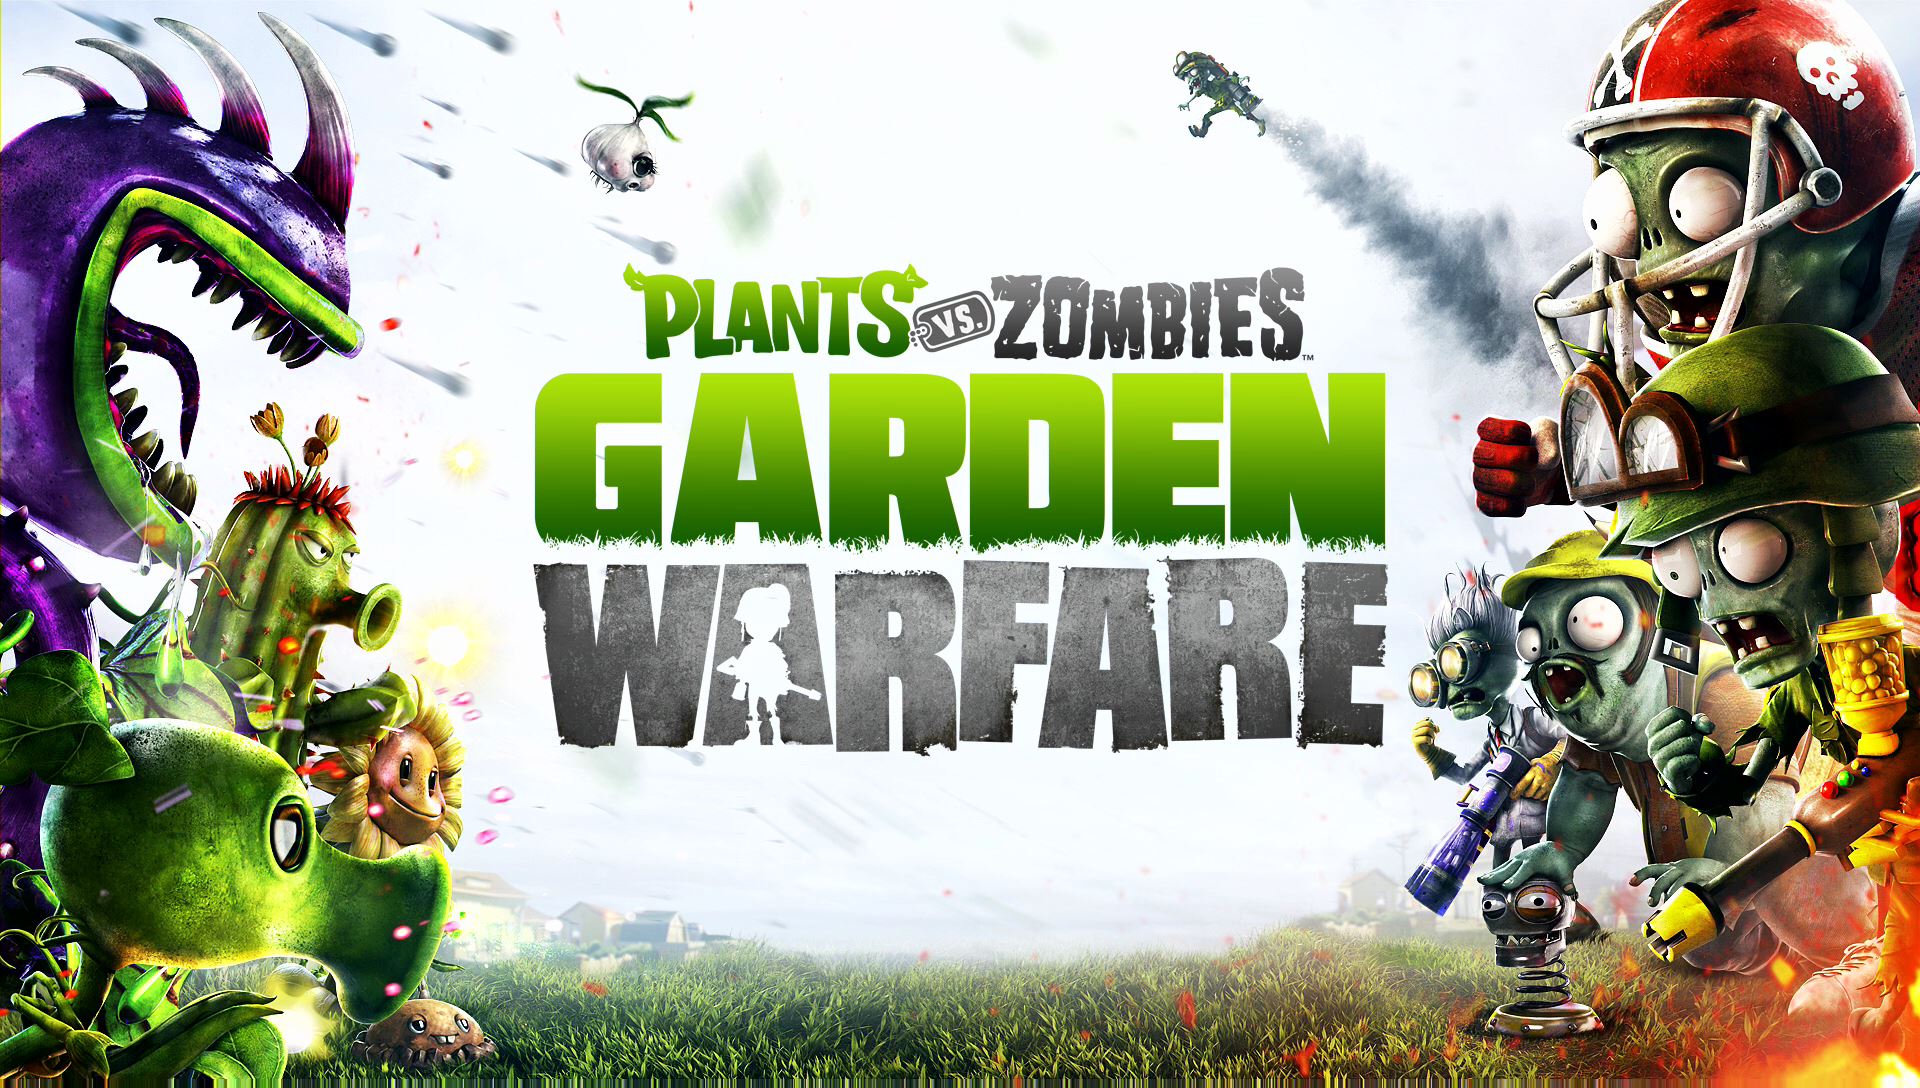 PlayStation E3 2014, Plants vs. Zombies: Garden Warfare